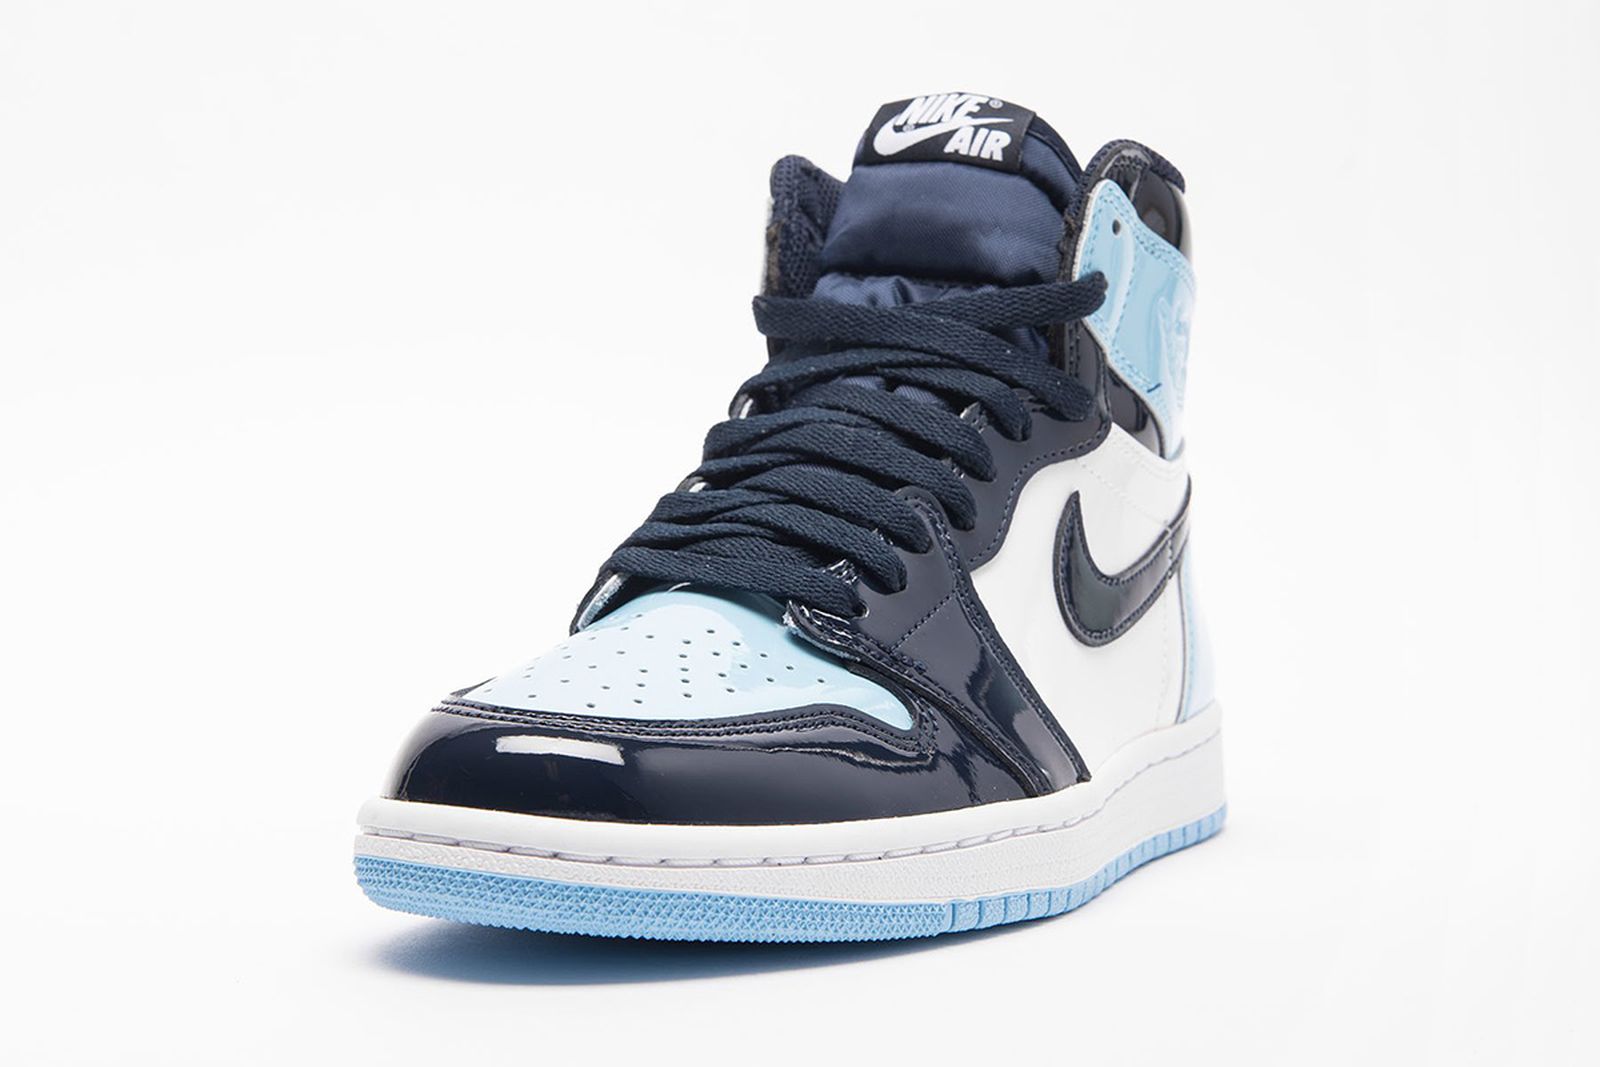 Nike dark blue jordan 1 Air Jordan 1 “UNC” Patent Leather: Where to Buy Today